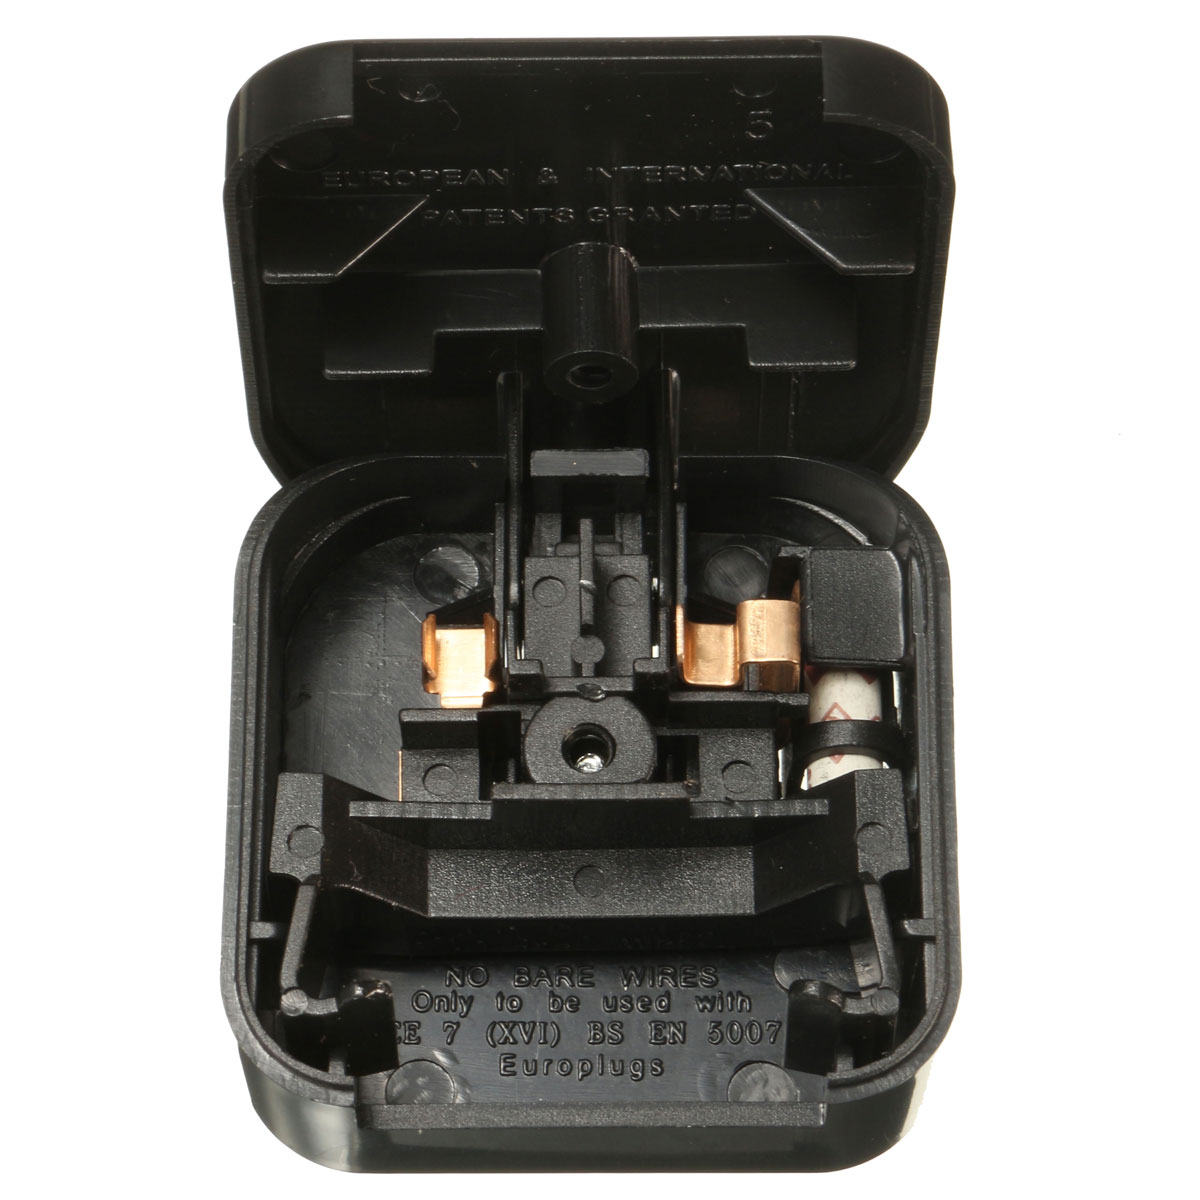 UK-Converter-Adaptor-Plug-Travel-Power-Connections-Black-1054514-7